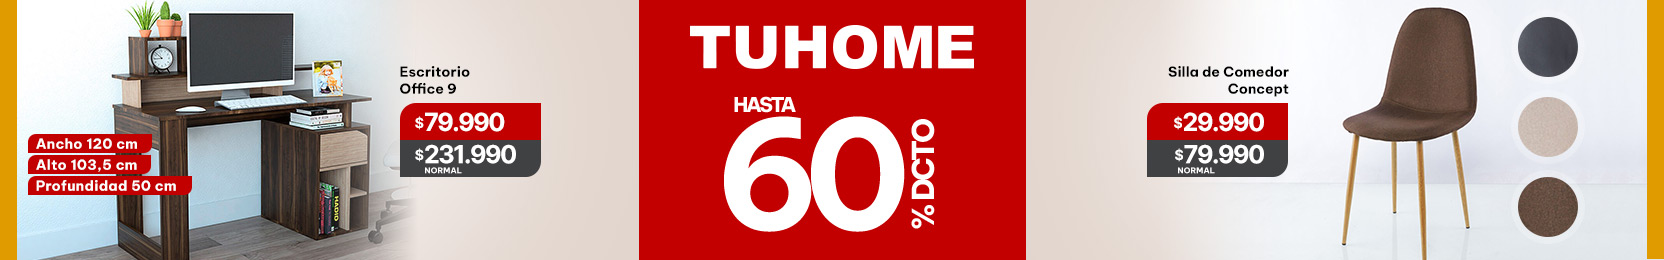 Tuhome